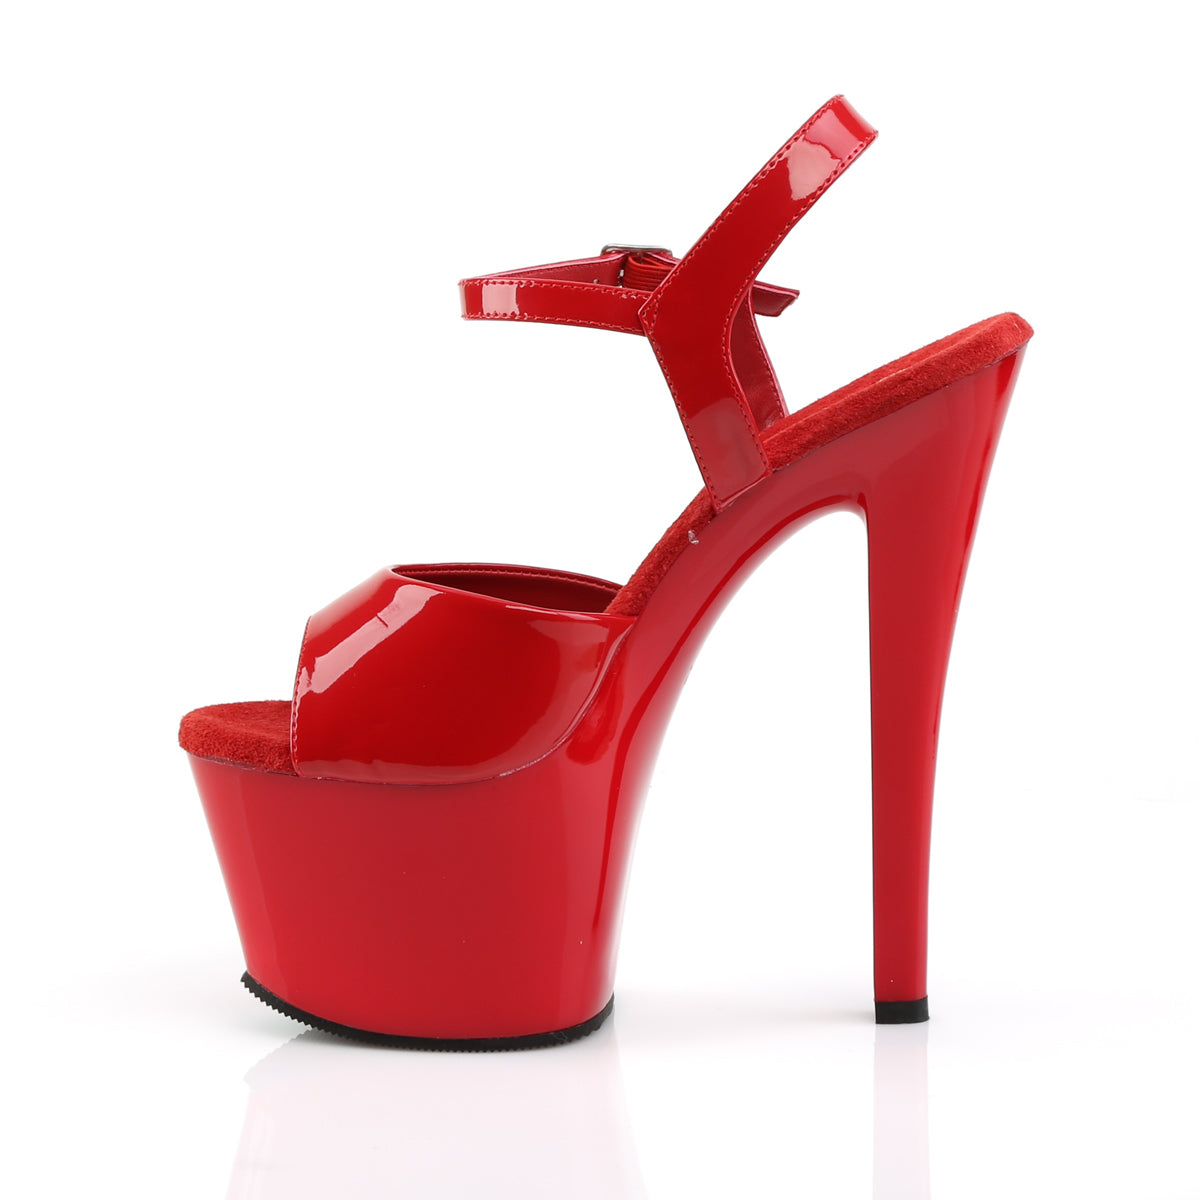 SKY-309 Pleaser 7 Inch Heel Red Pole Dancing Platforms-Pleaser- Sexy Shoes Pole Dance Heels